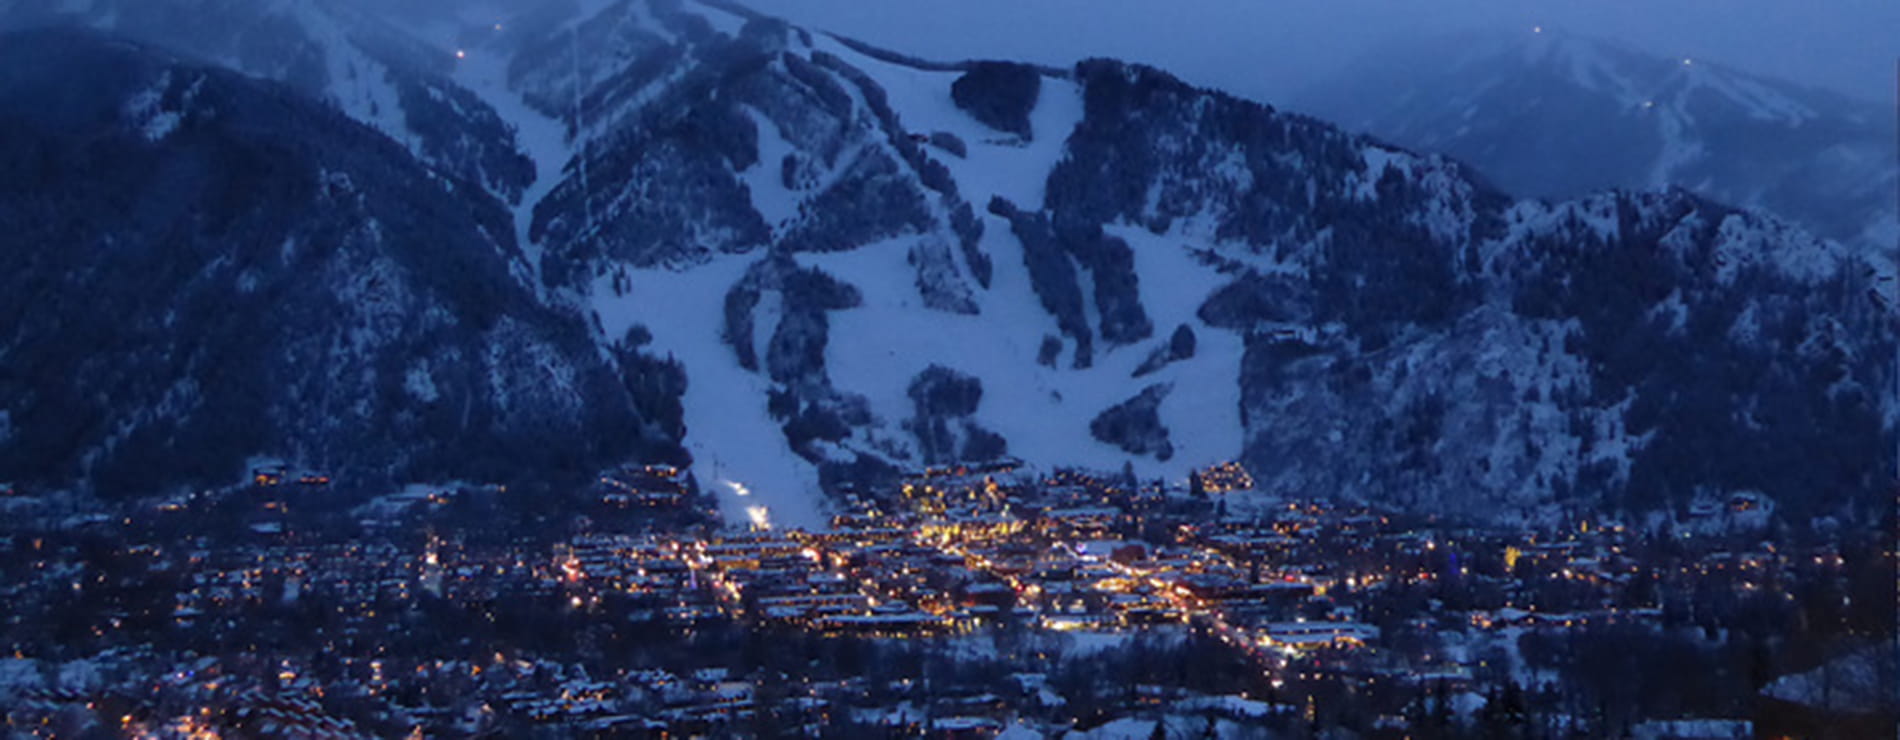 Aspen at Night- Ski Runs - Large | Limelight Hotels | Aspen